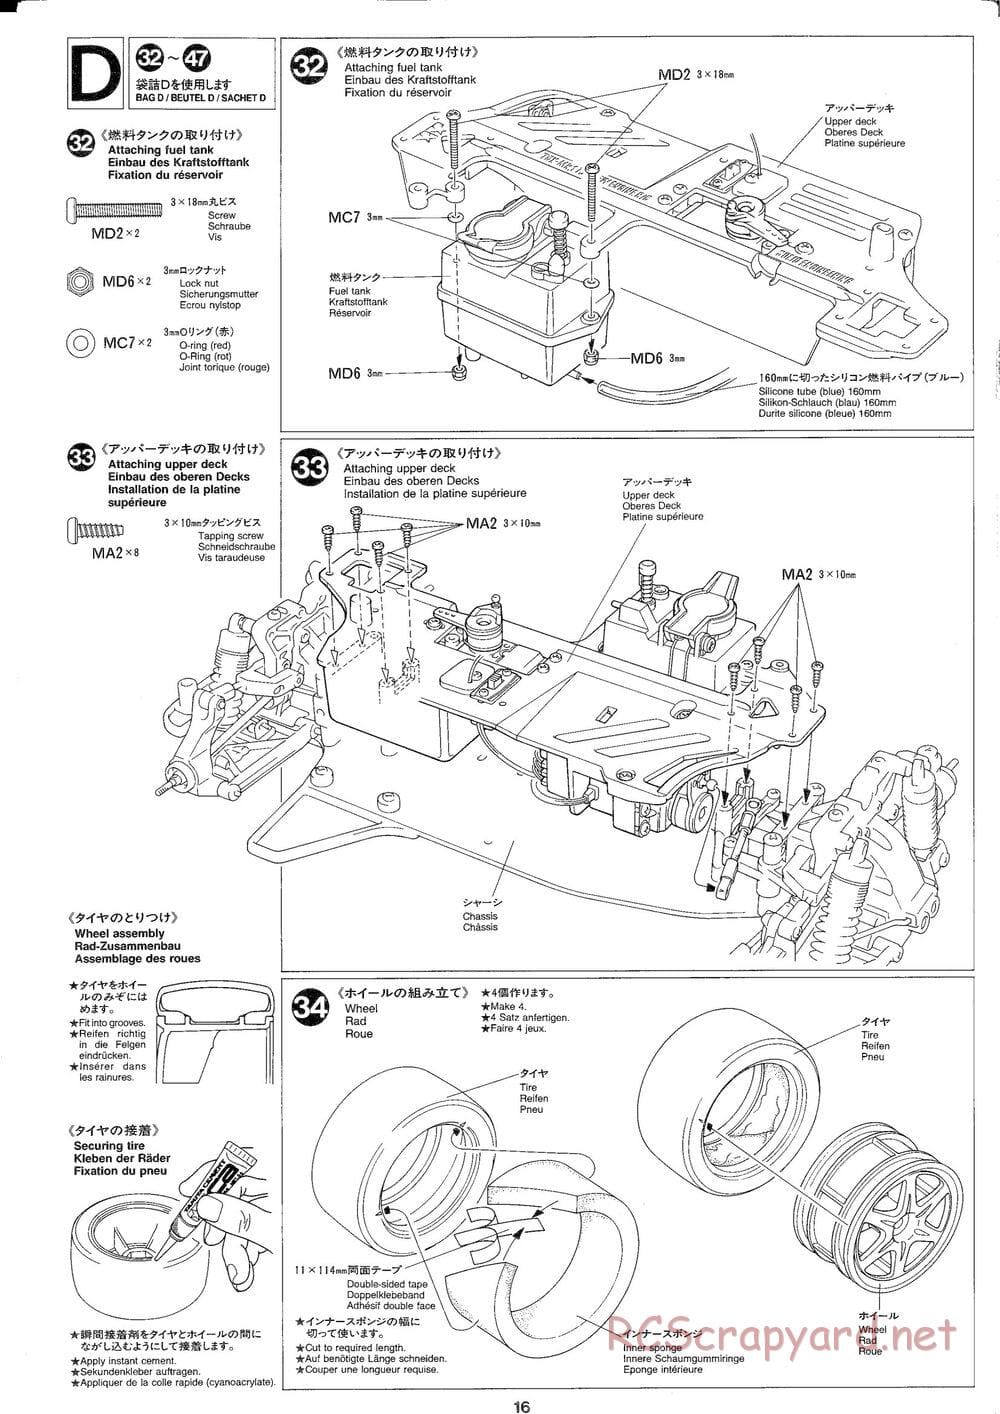 Tamiya - TGX Mk.1 TRF Special Chassis - Manual - Page 16